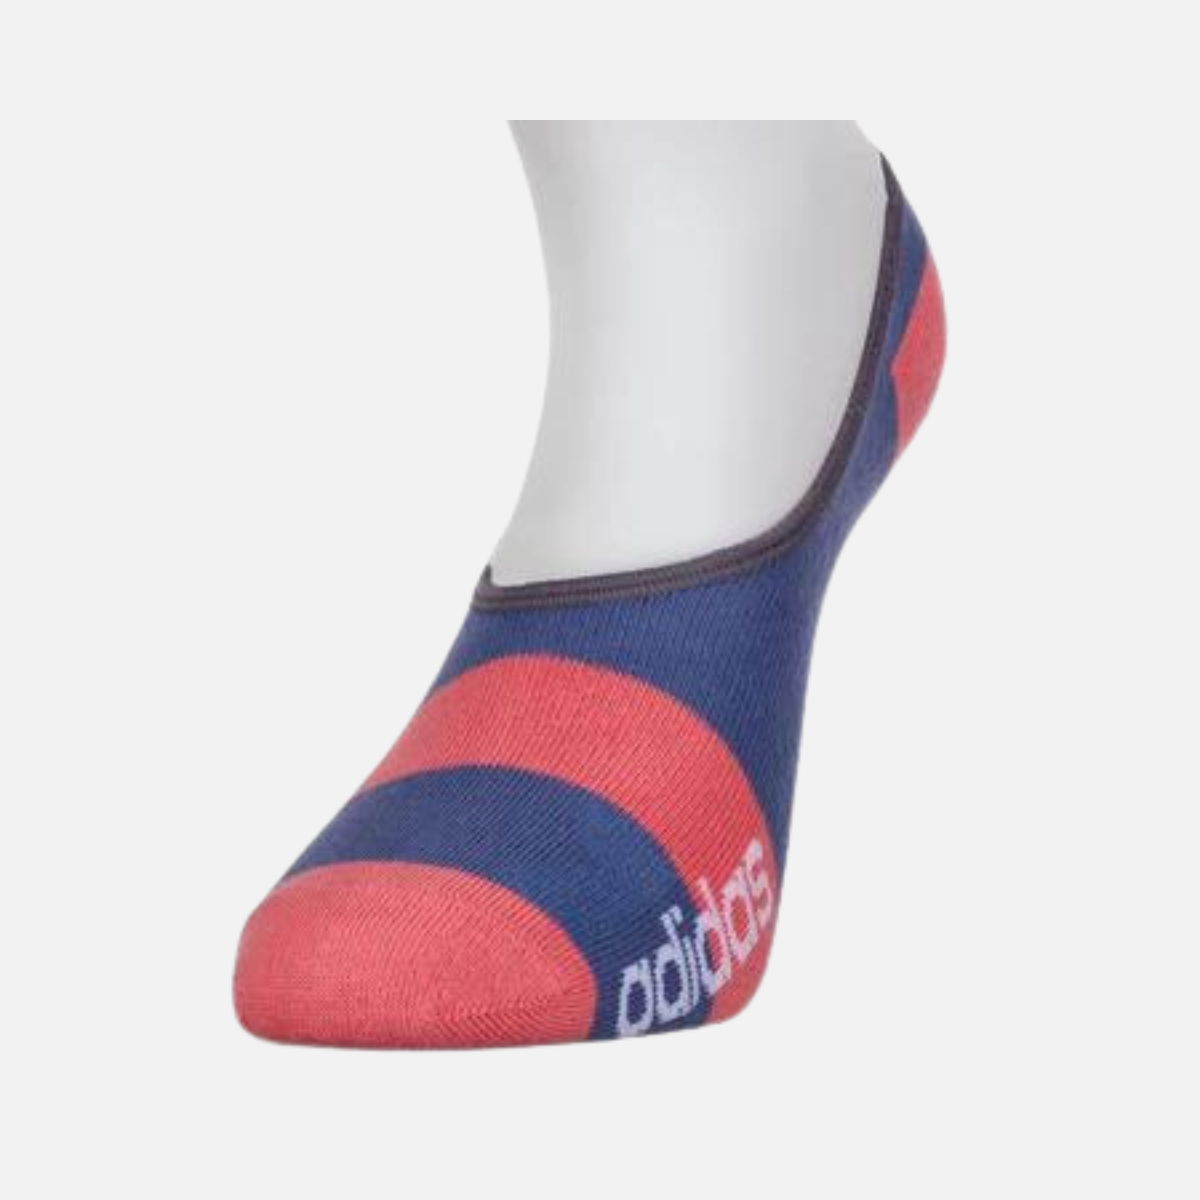 Adidas Flat Knit No Show Cotton Men's Socks (3 Pair)